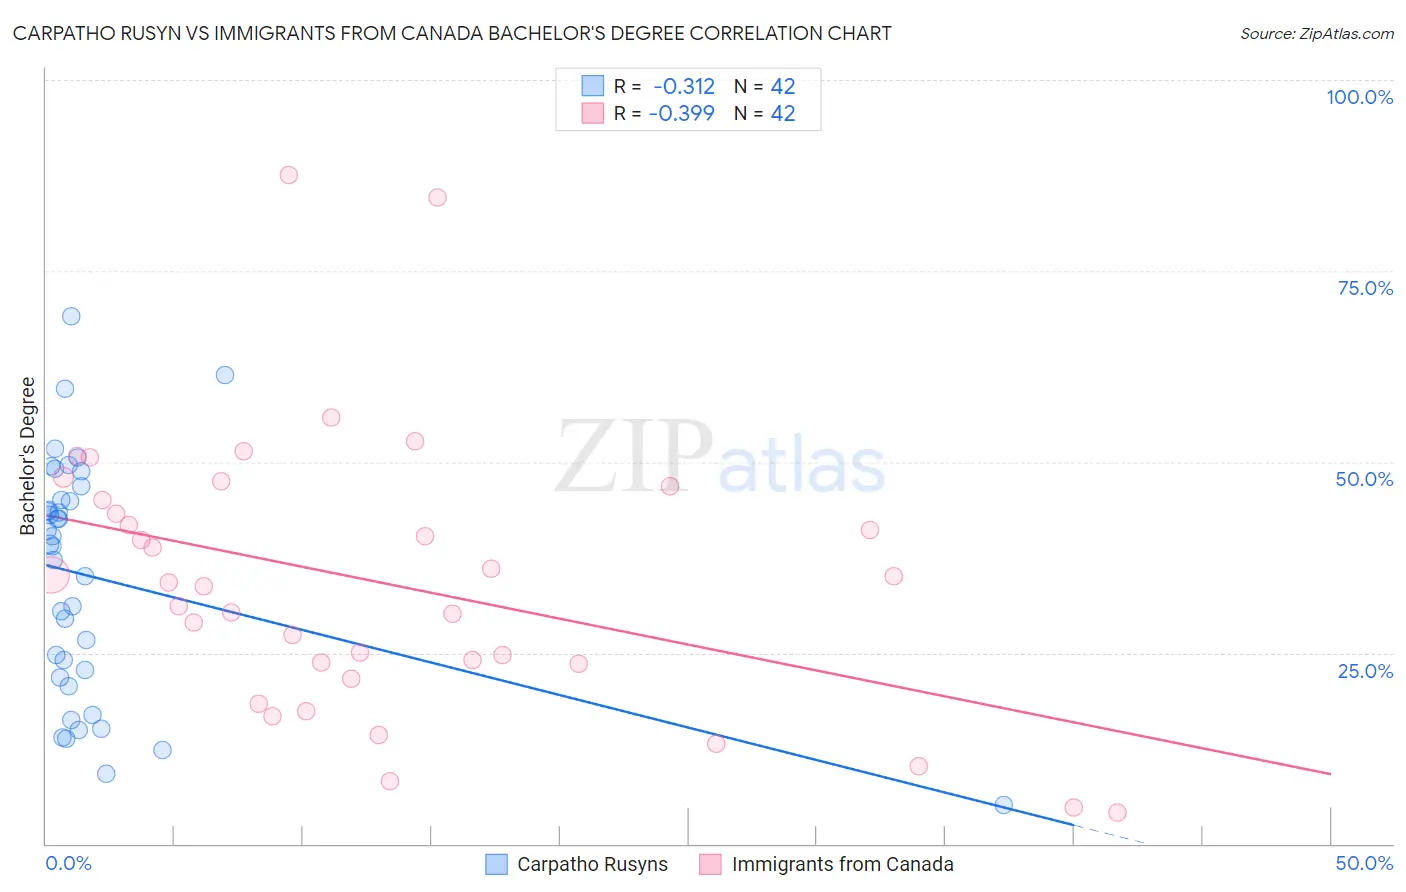 Carpatho Rusyn vs Immigrants from Canada Bachelor's Degree